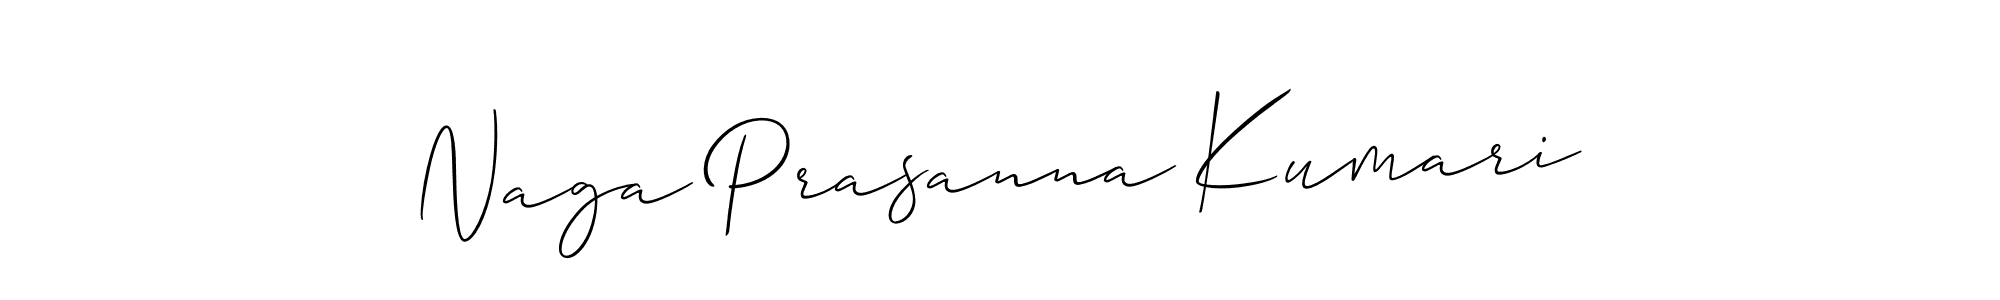 Make a beautiful signature design for name Naga Prasanna Kumari. Use this online signature maker to create a handwritten signature for free. Naga Prasanna Kumari signature style 2 images and pictures png